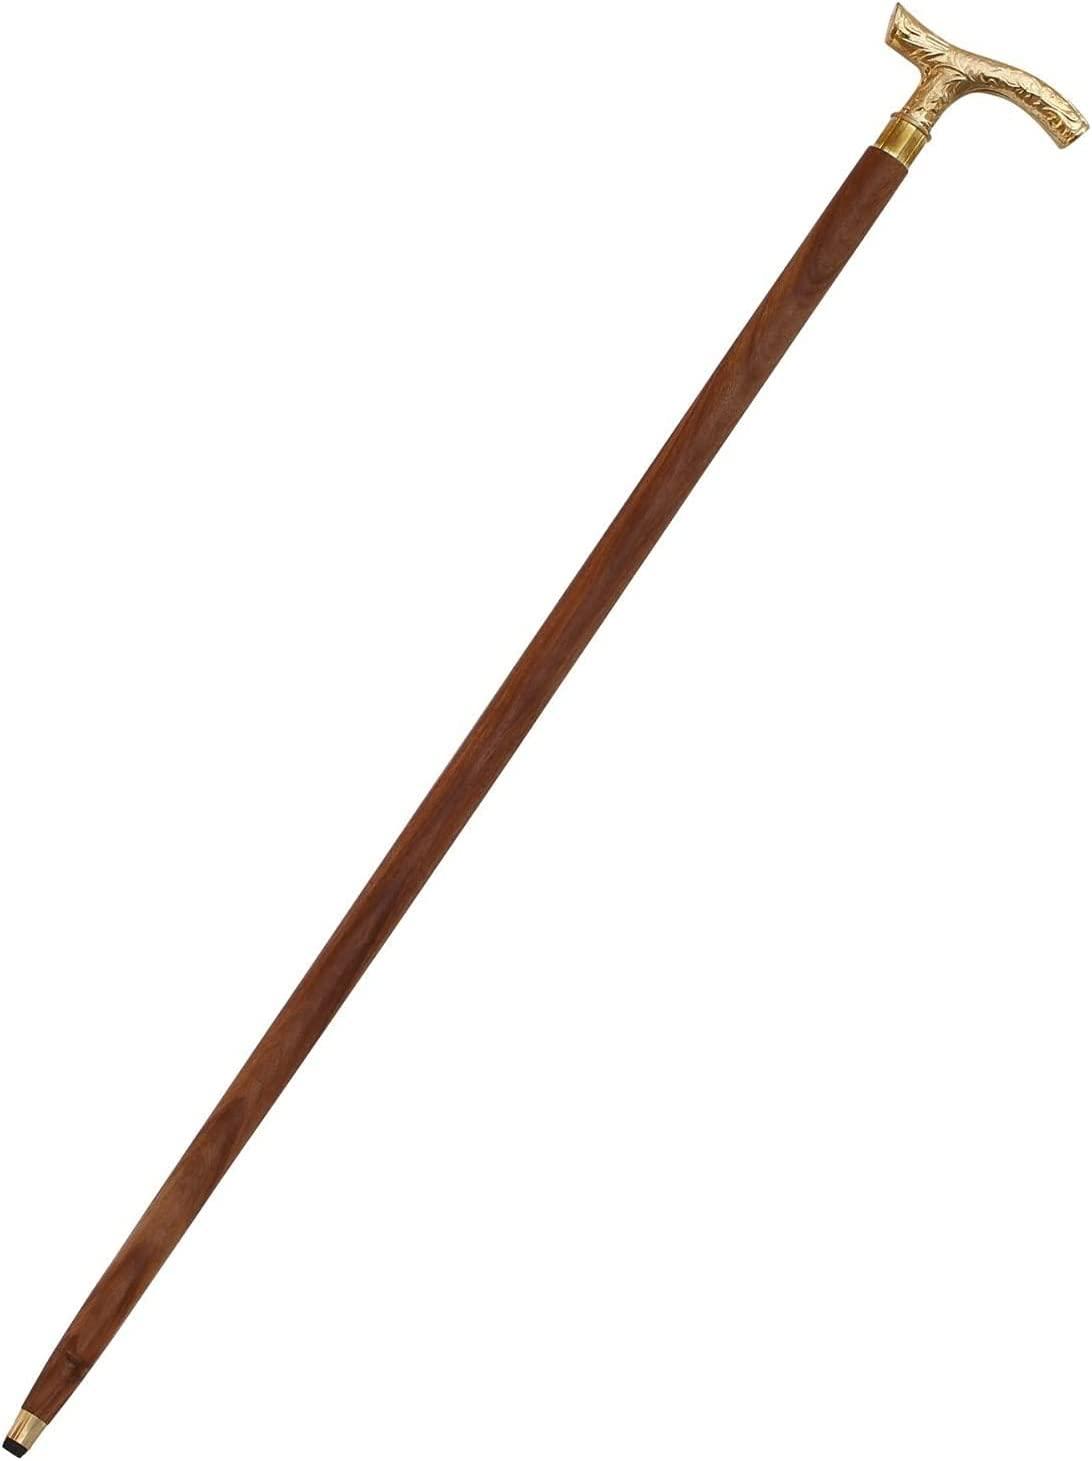 Humaira Nautical Walking Stick - Men Derby Canes and Wooden Walking Stick  for Men and Women - 37 Brown Ebony Brass T Shape Handle in Golden Tone  Natural Wood Unisex Cane